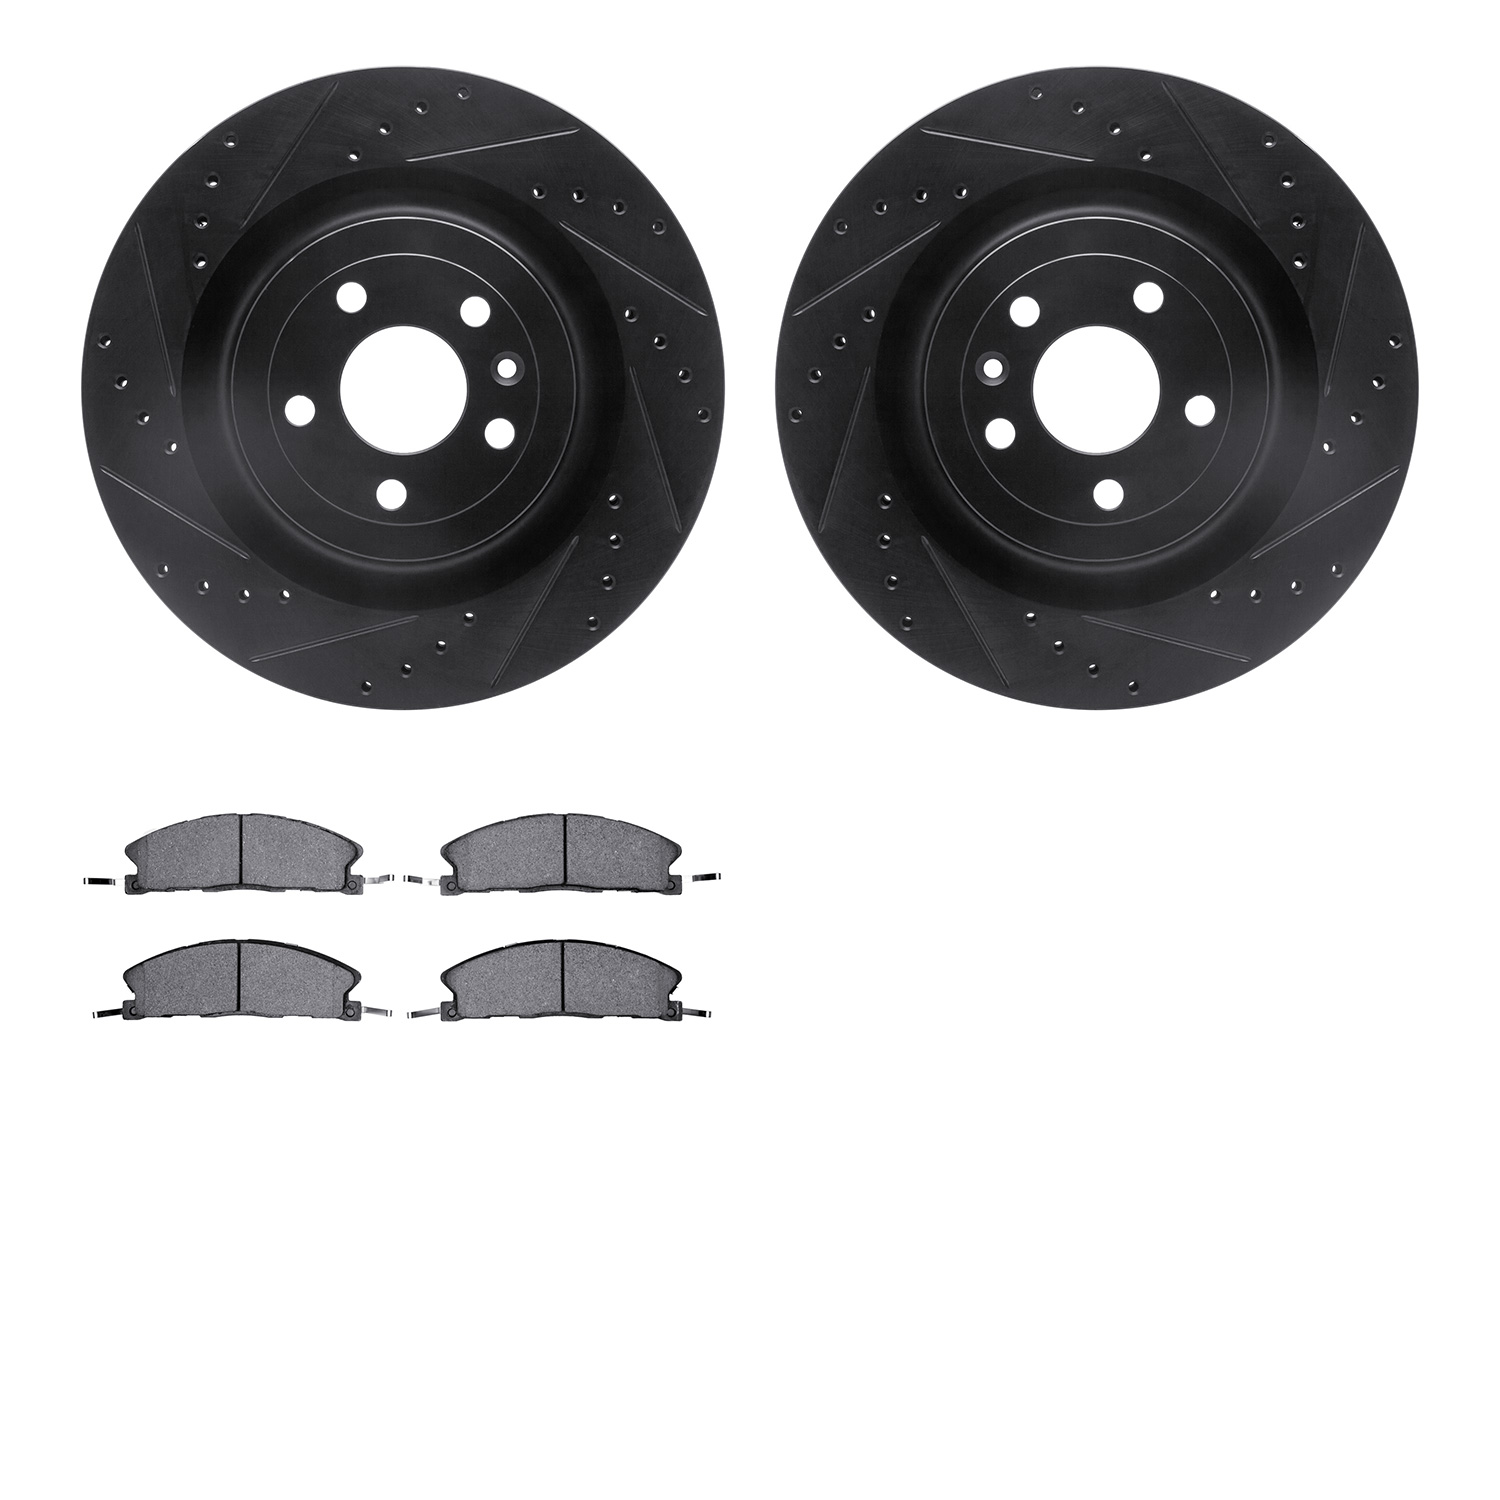 8302-54209 Drilled/Slotted Brake Rotors with 3000-Series Ceramic Brake Pads Kit [Black], 2013-2019 Ford/Lincoln/Mercury/Mazda, P